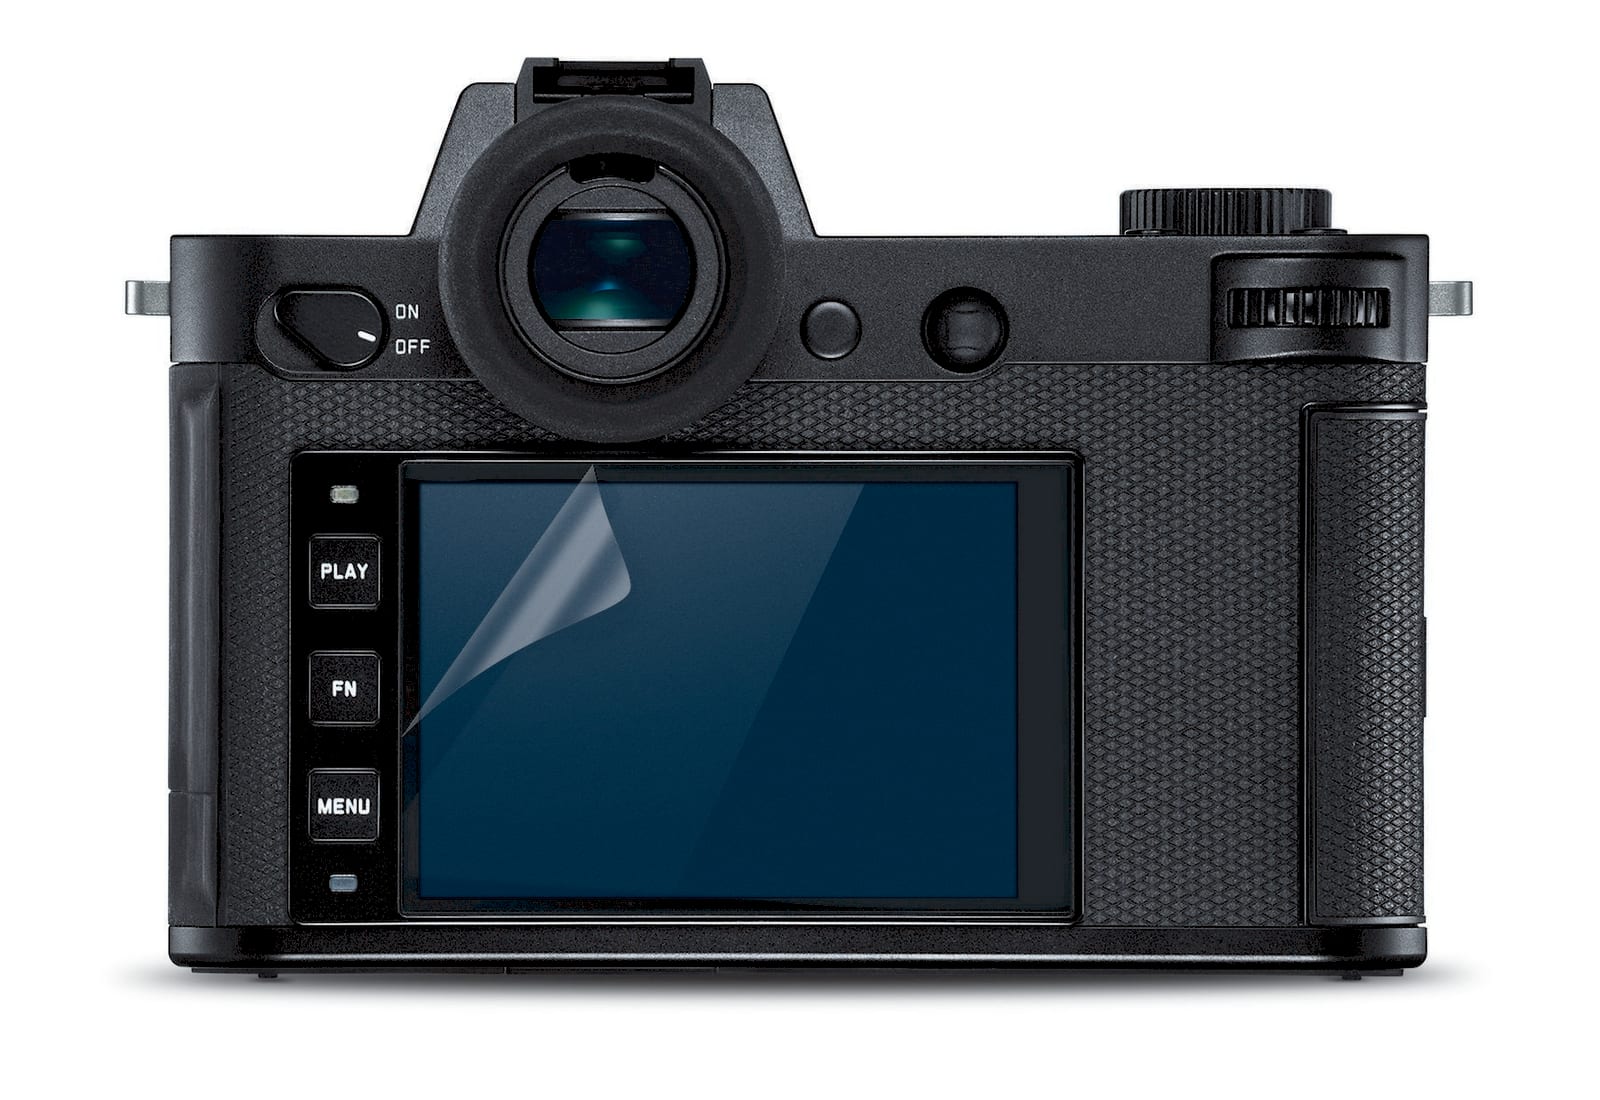 Leica SL2 full-frame mirrorless camera